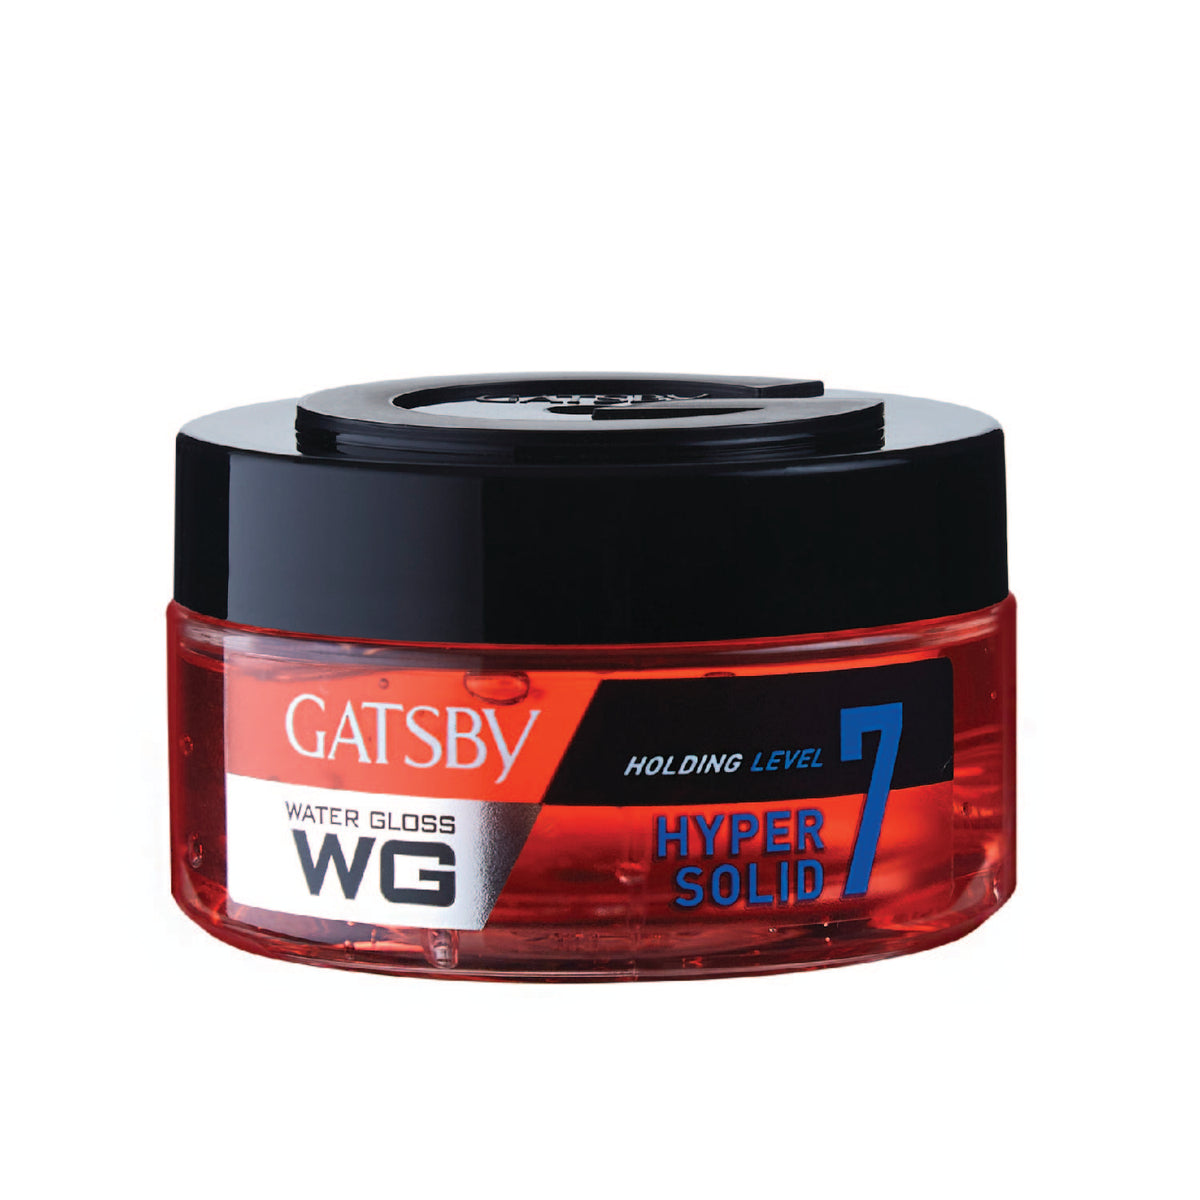 Gatsby Water Gloss - Hyper Solid, 30g Gardenia Cosmotrade LLP